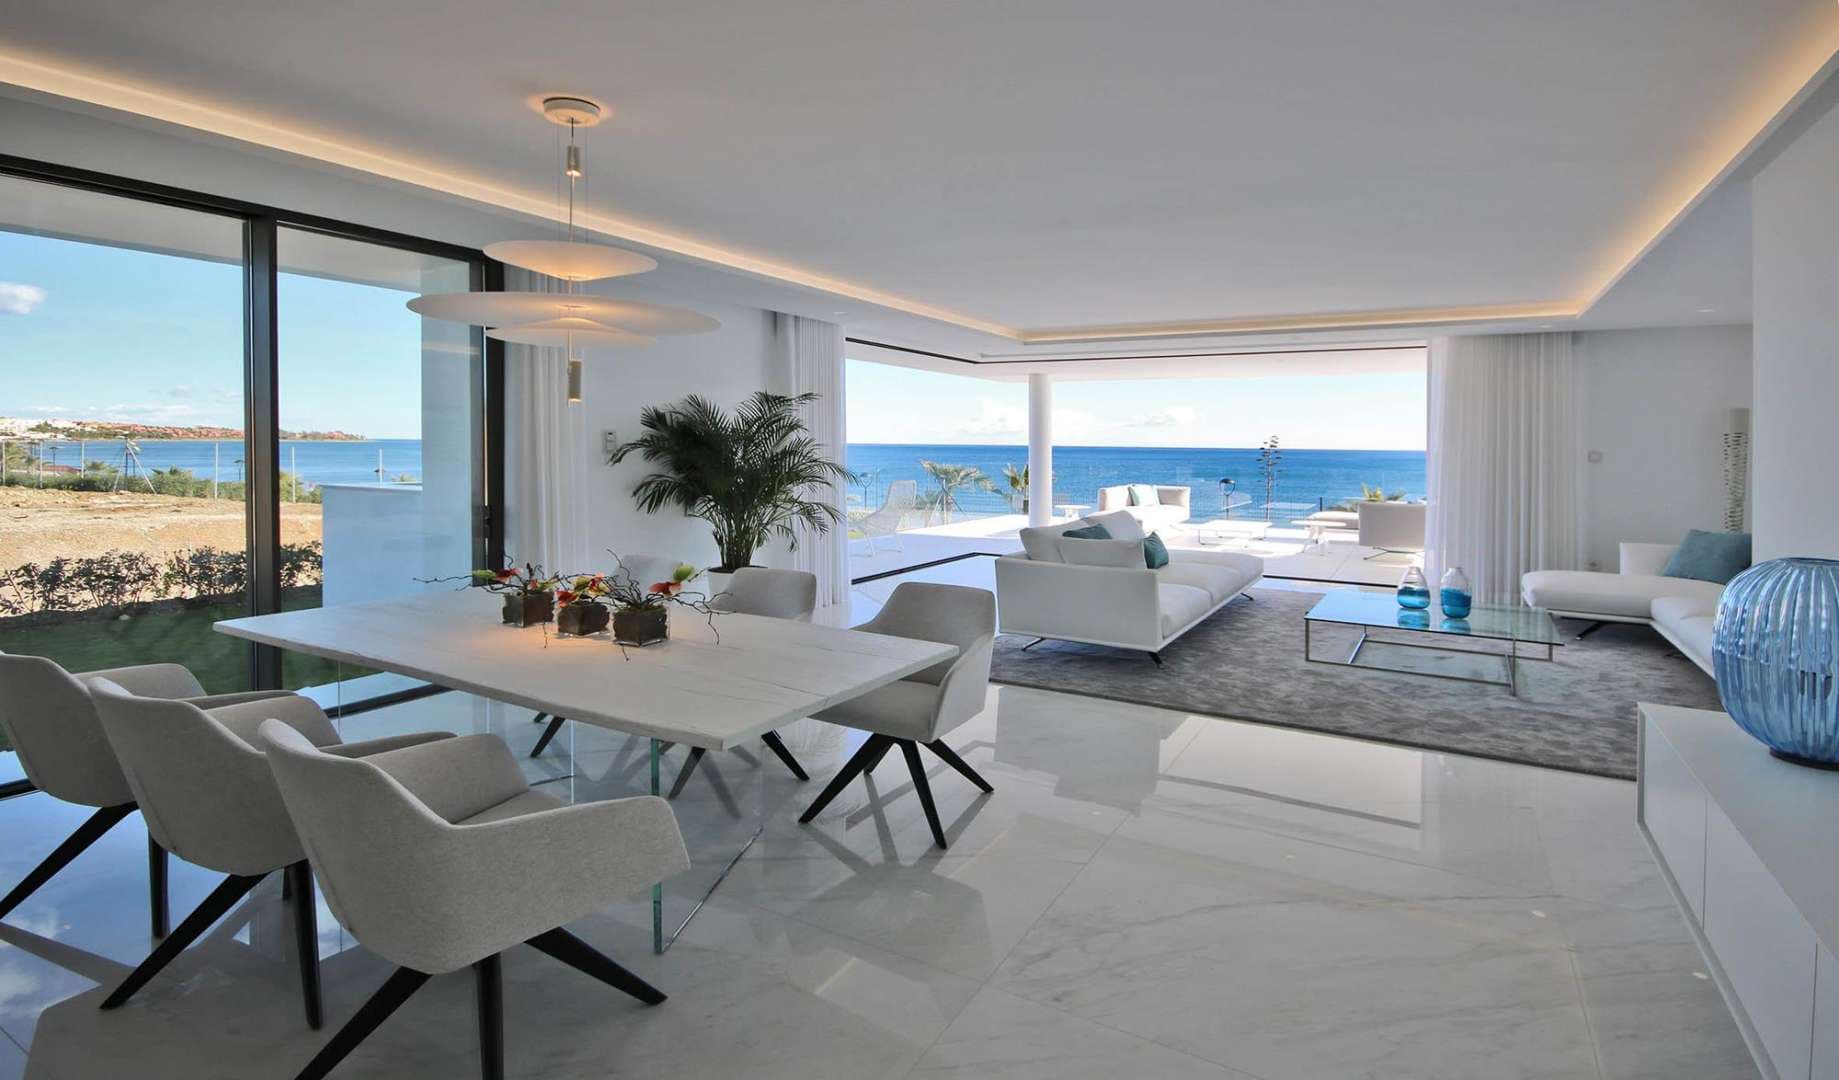 3 Bedroom Apartment For Sale Estepona Beach Frontline Lp05826 2ea94c23368b8a00.jpg